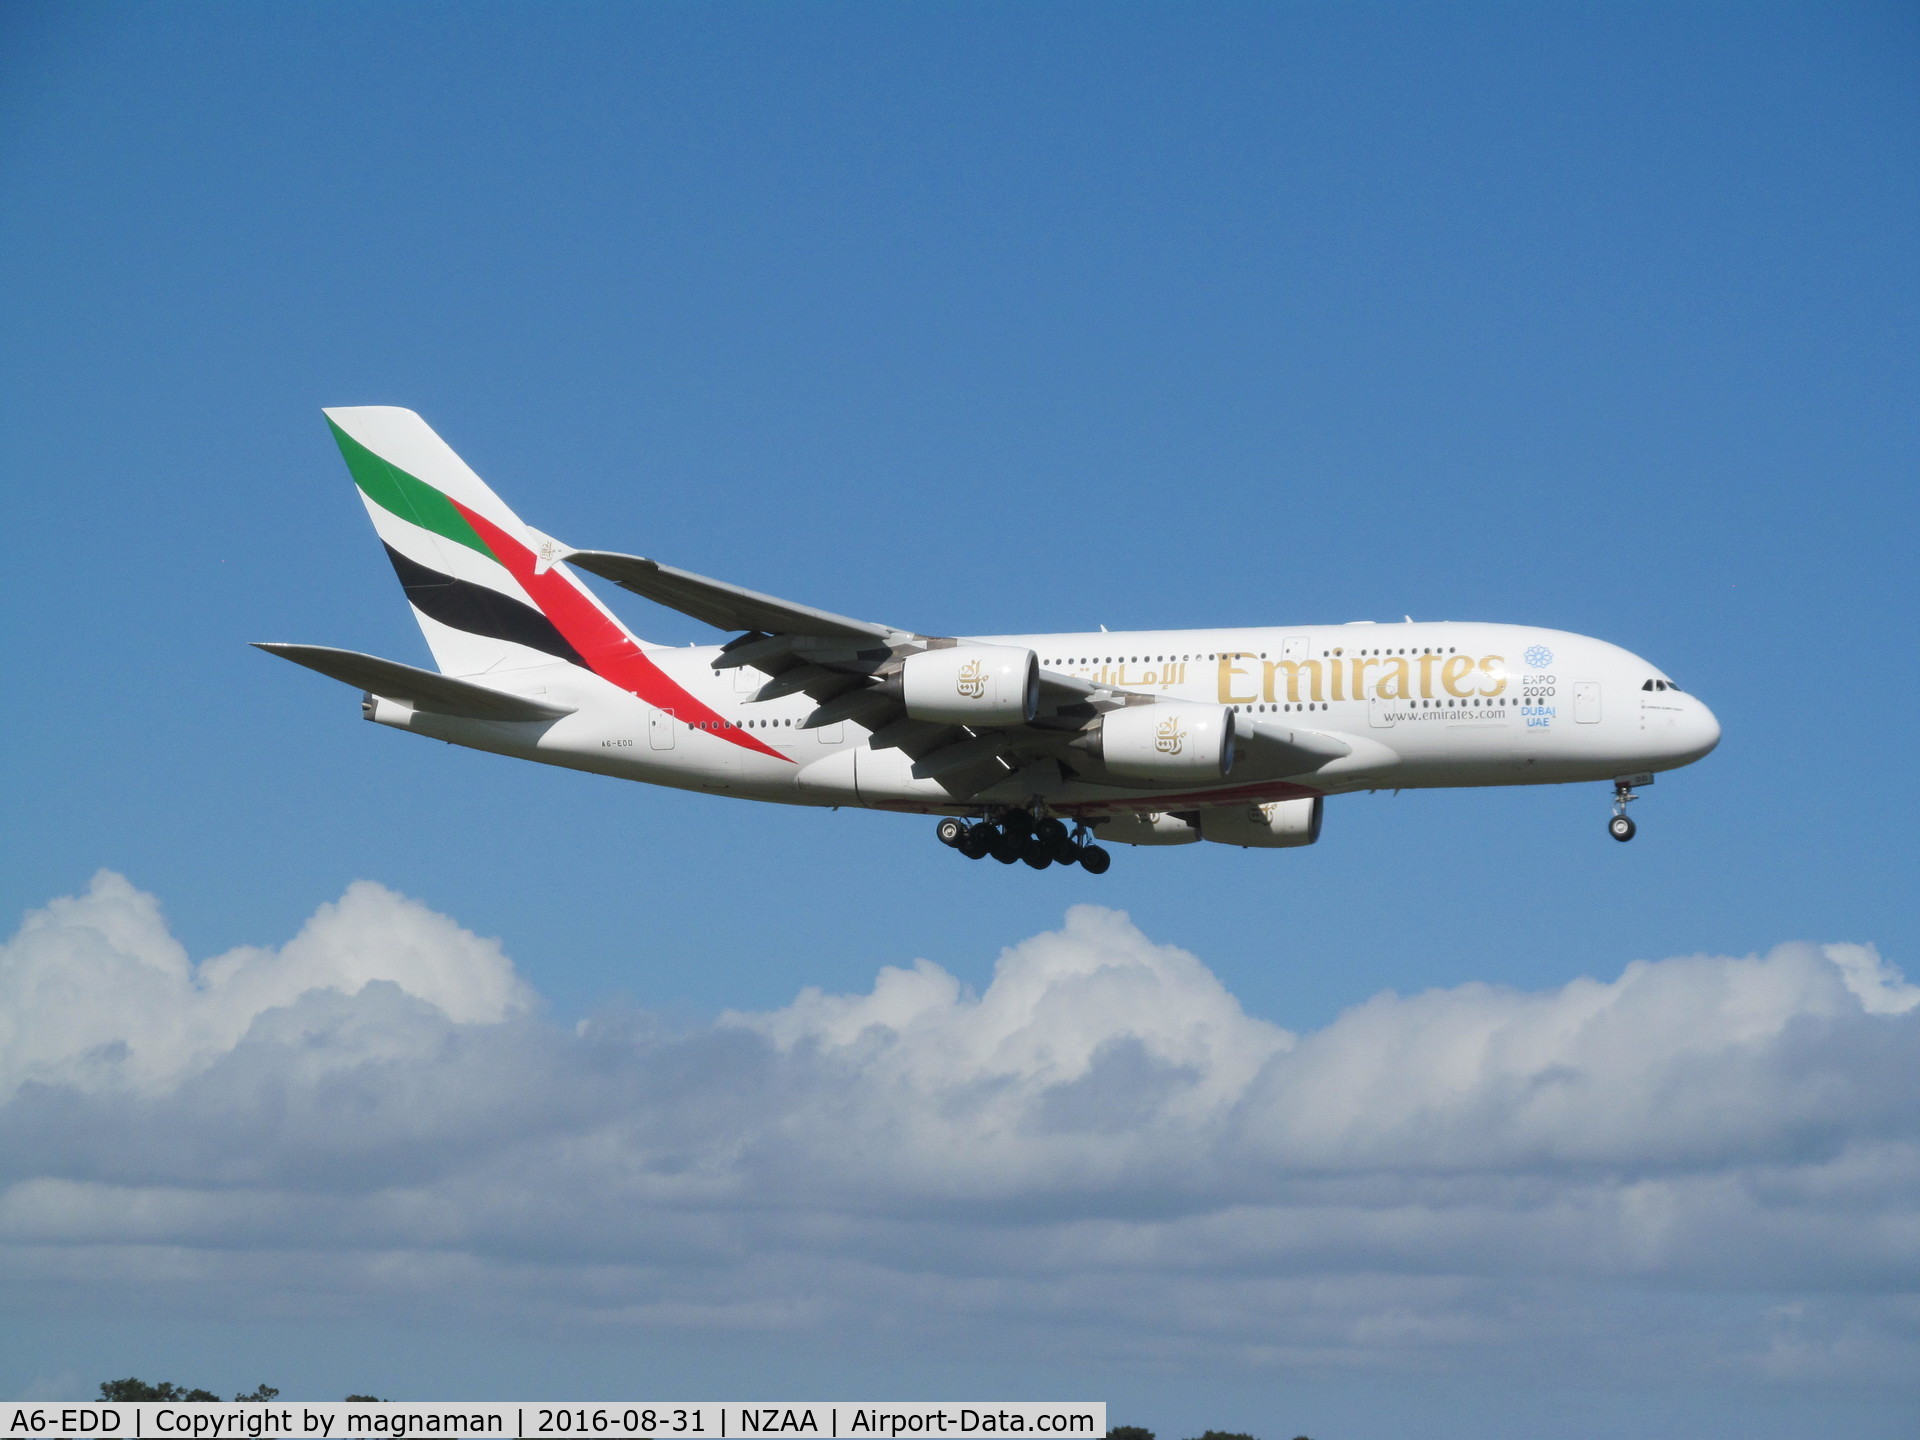 A6-EDD, 2008 Airbus A380-861 C/N 020, About to touchdown